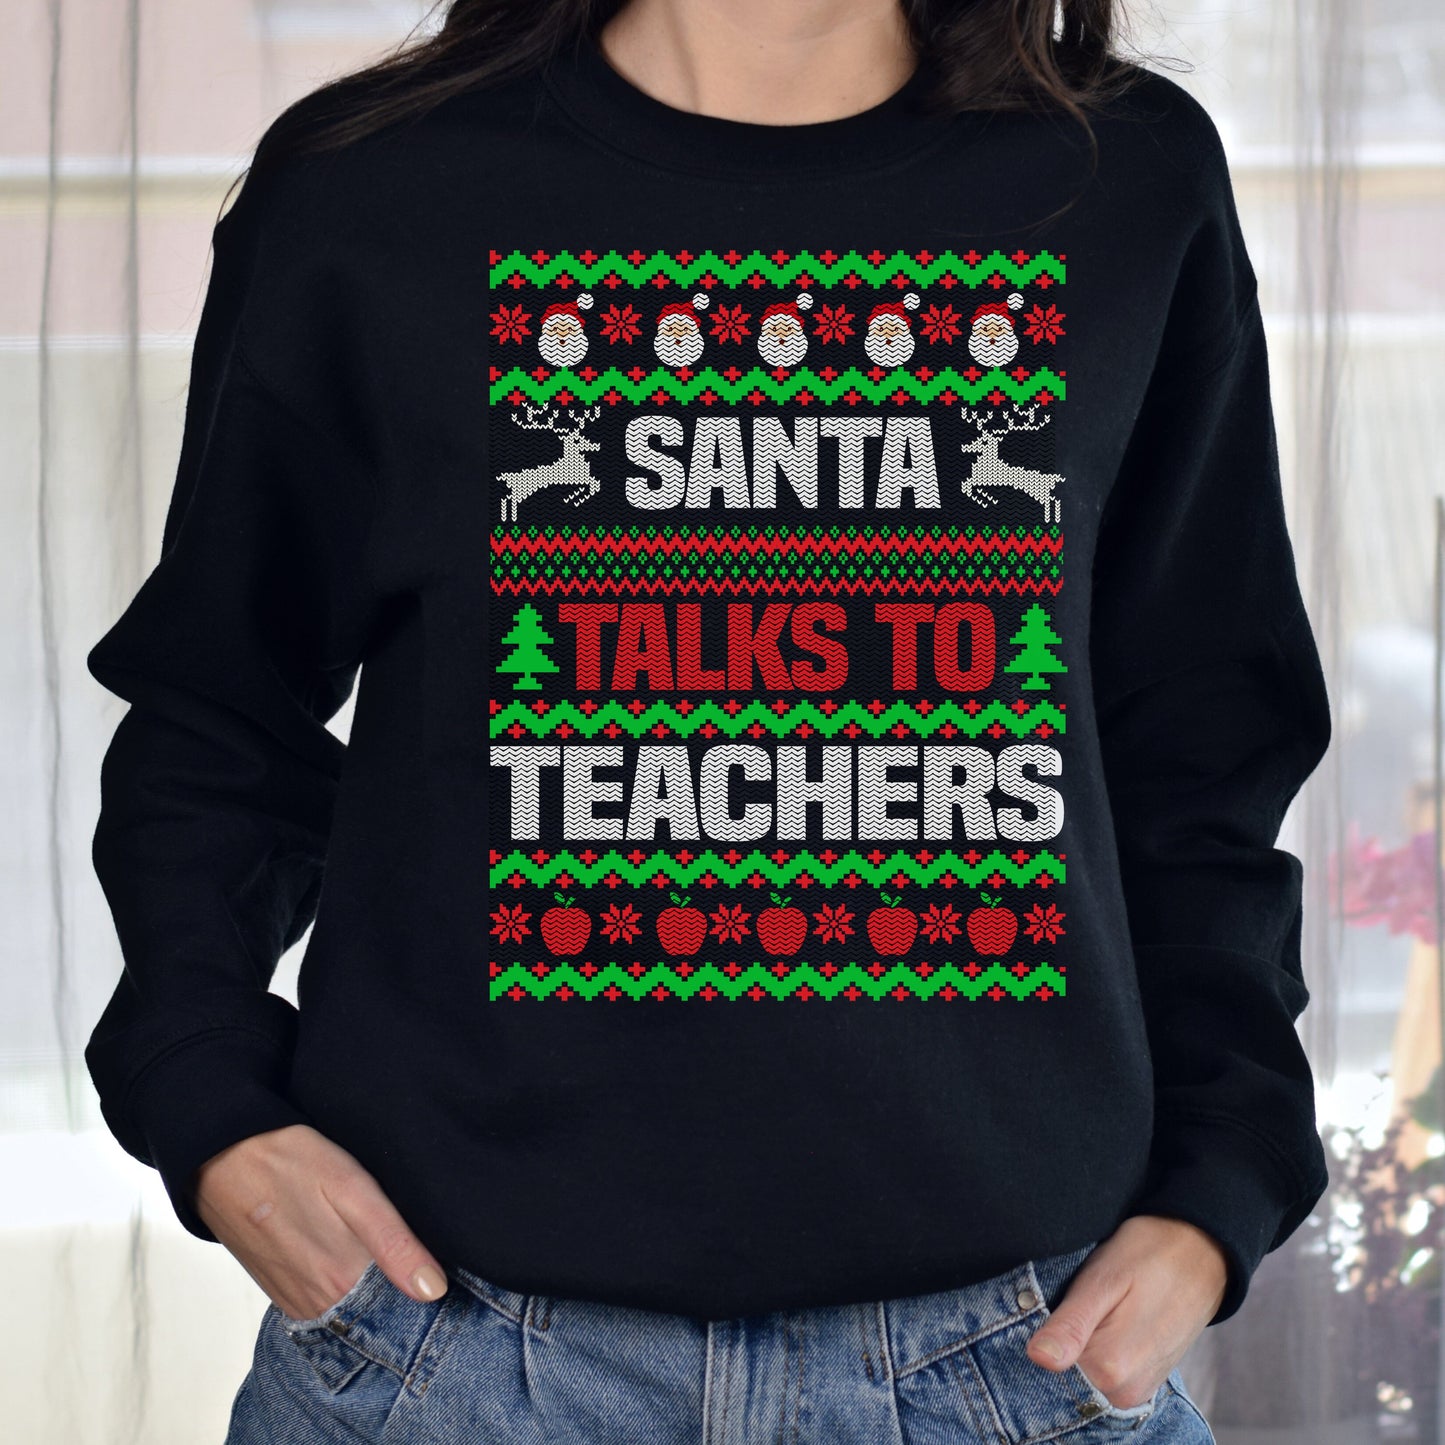 Santa talks to teachers Christmas Unisex Sweatshirt Ugly sweater Black Dark Heather-Family-Gift-Planet